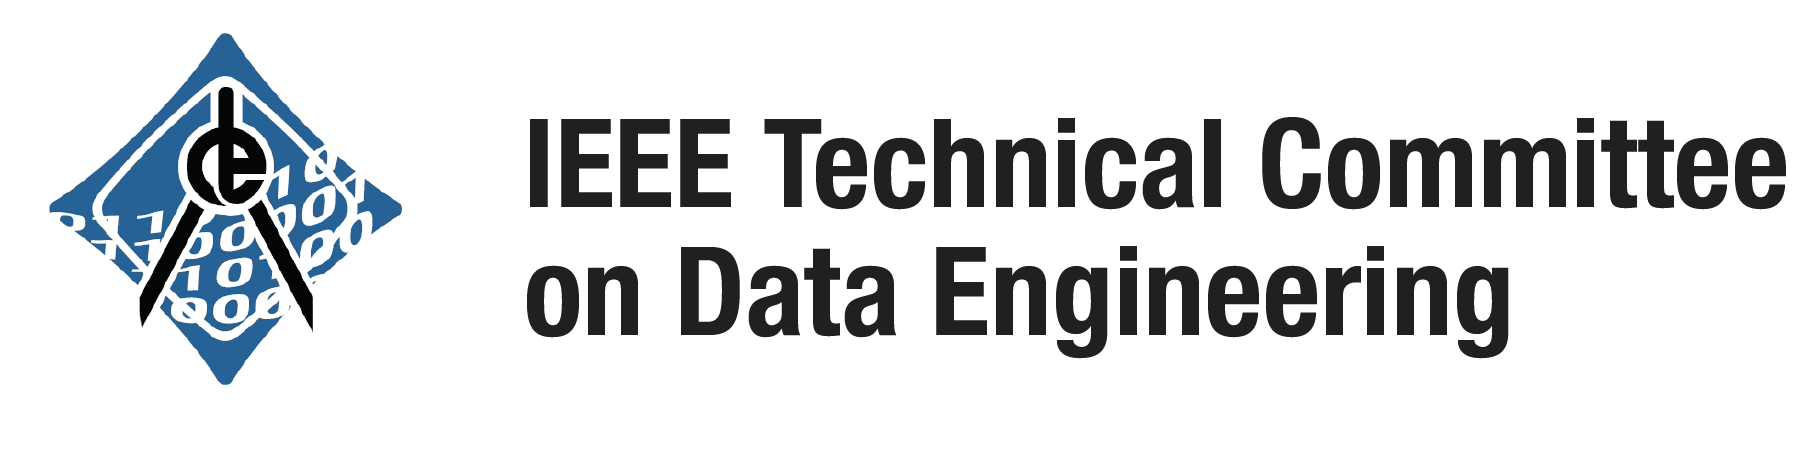 IEEE Technical Committee on Data Engineering